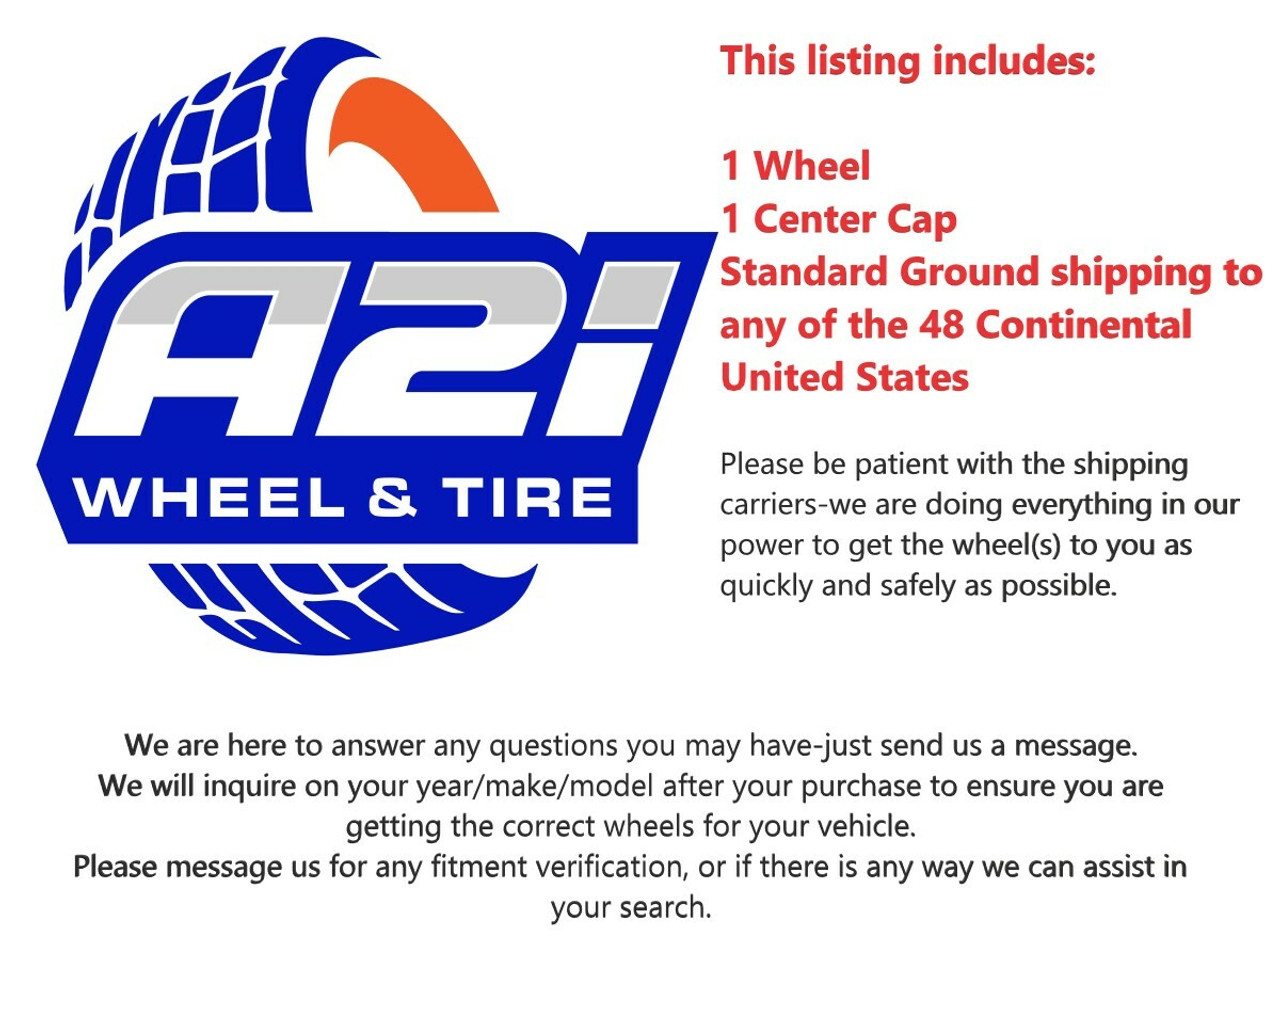 ATX AO402 Indy 24.5x8.25 10x11.25 Satin Black Milled - Rear Wheel 24.5" -168mm